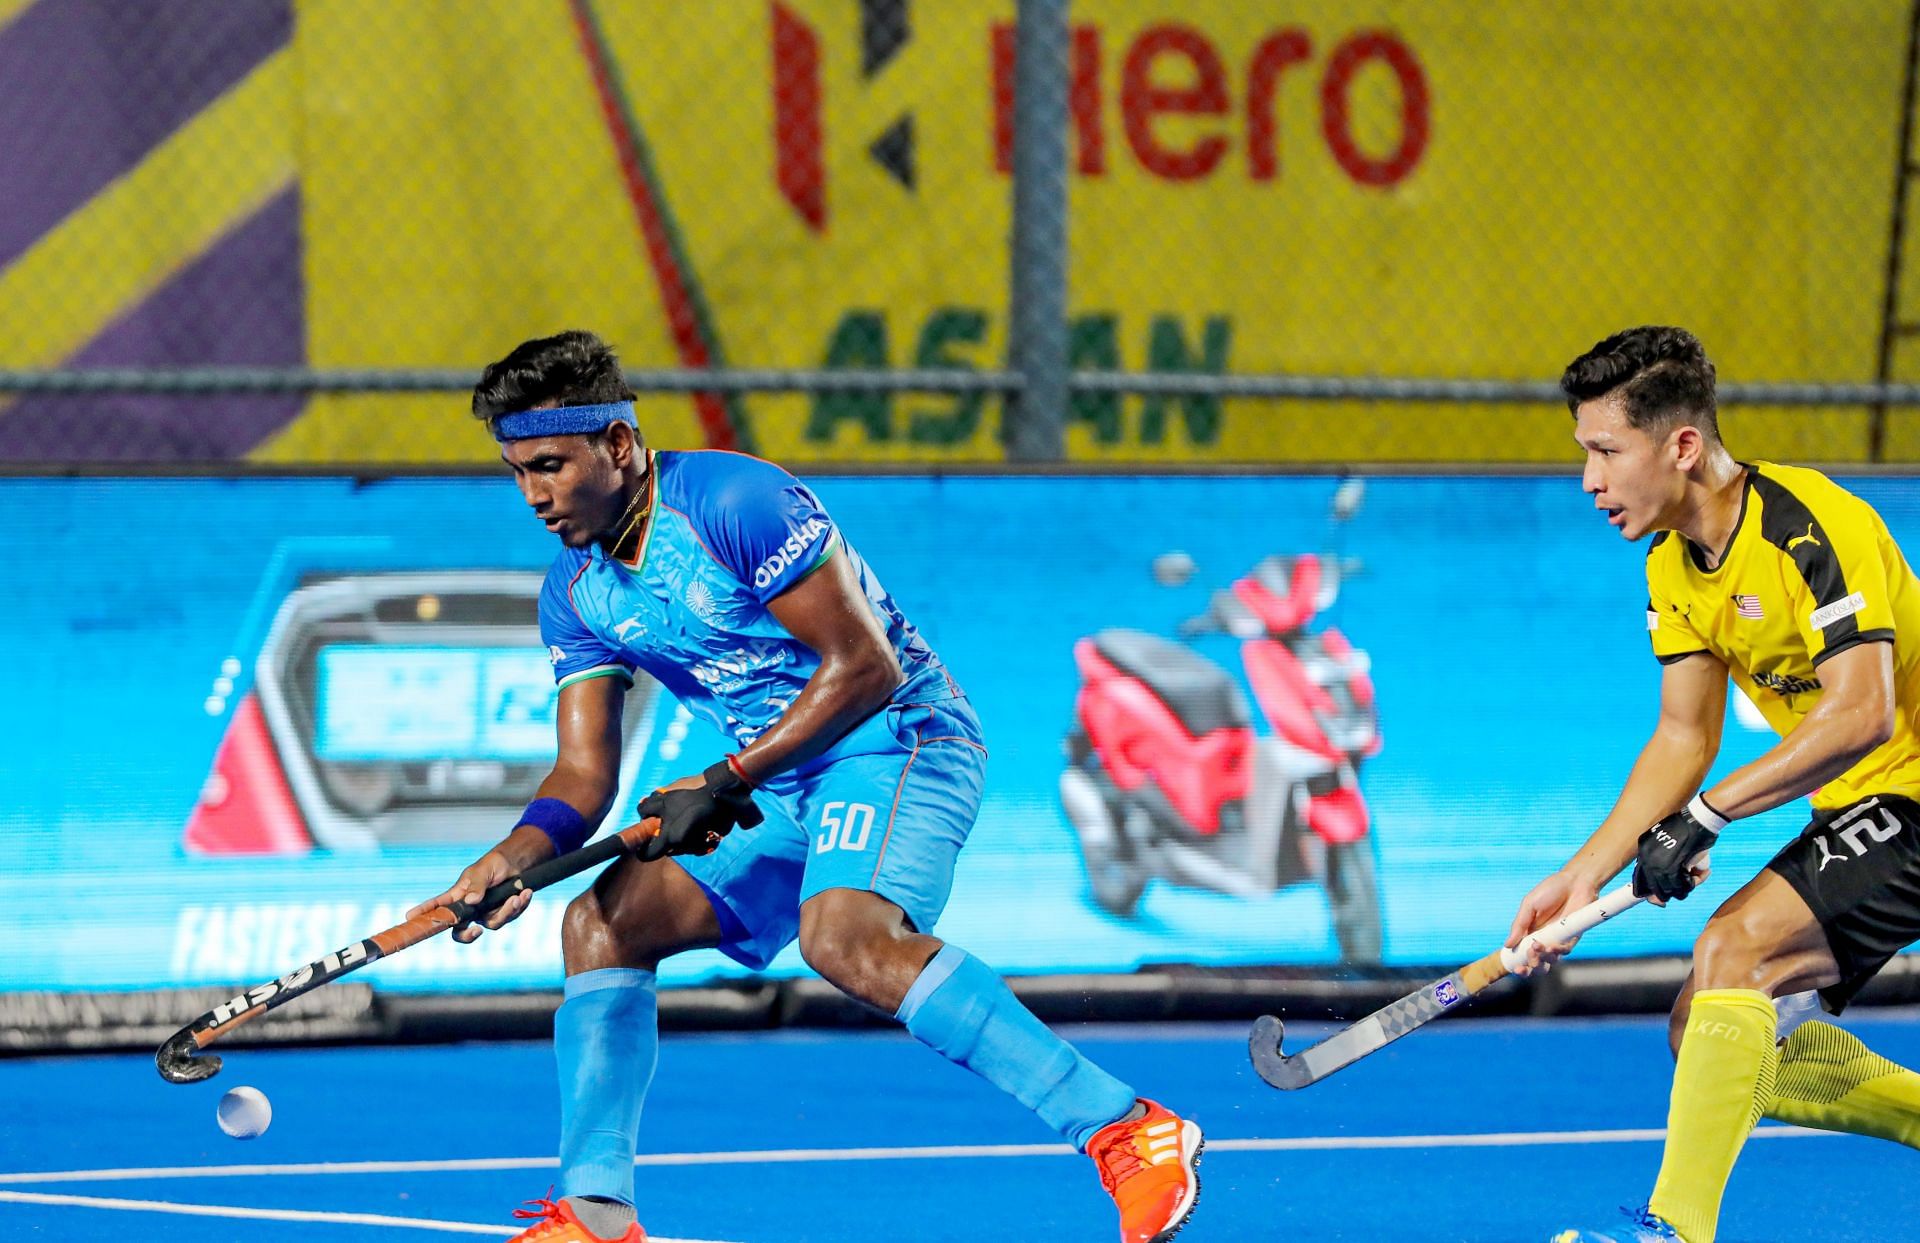 Tamil Nadu player Karthi Selvam (in blue) - Image via Hockey India